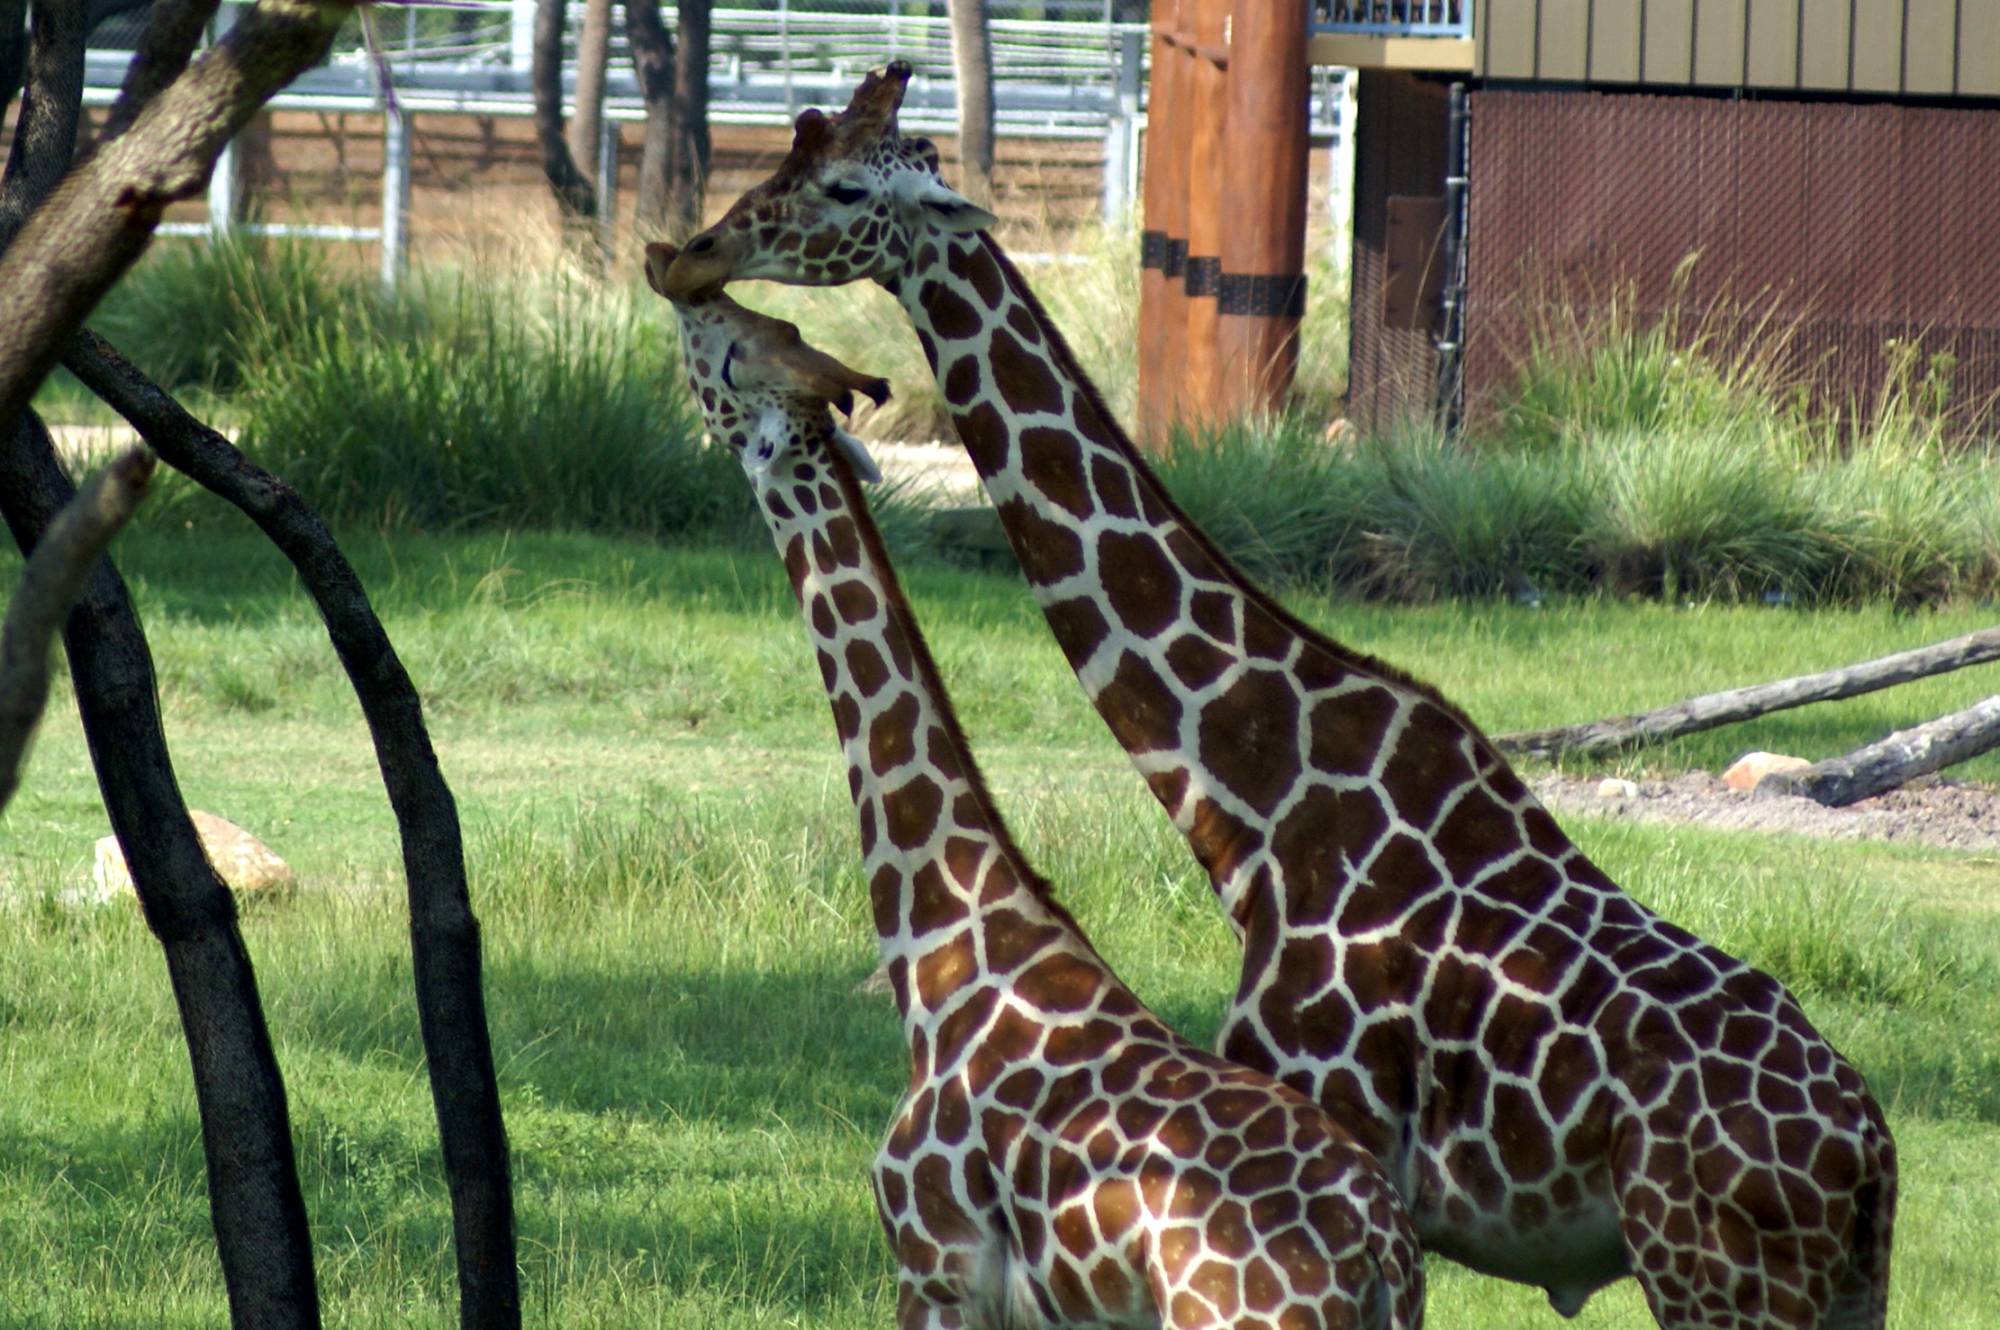 Savanna View of Mom and Baby Giraffe